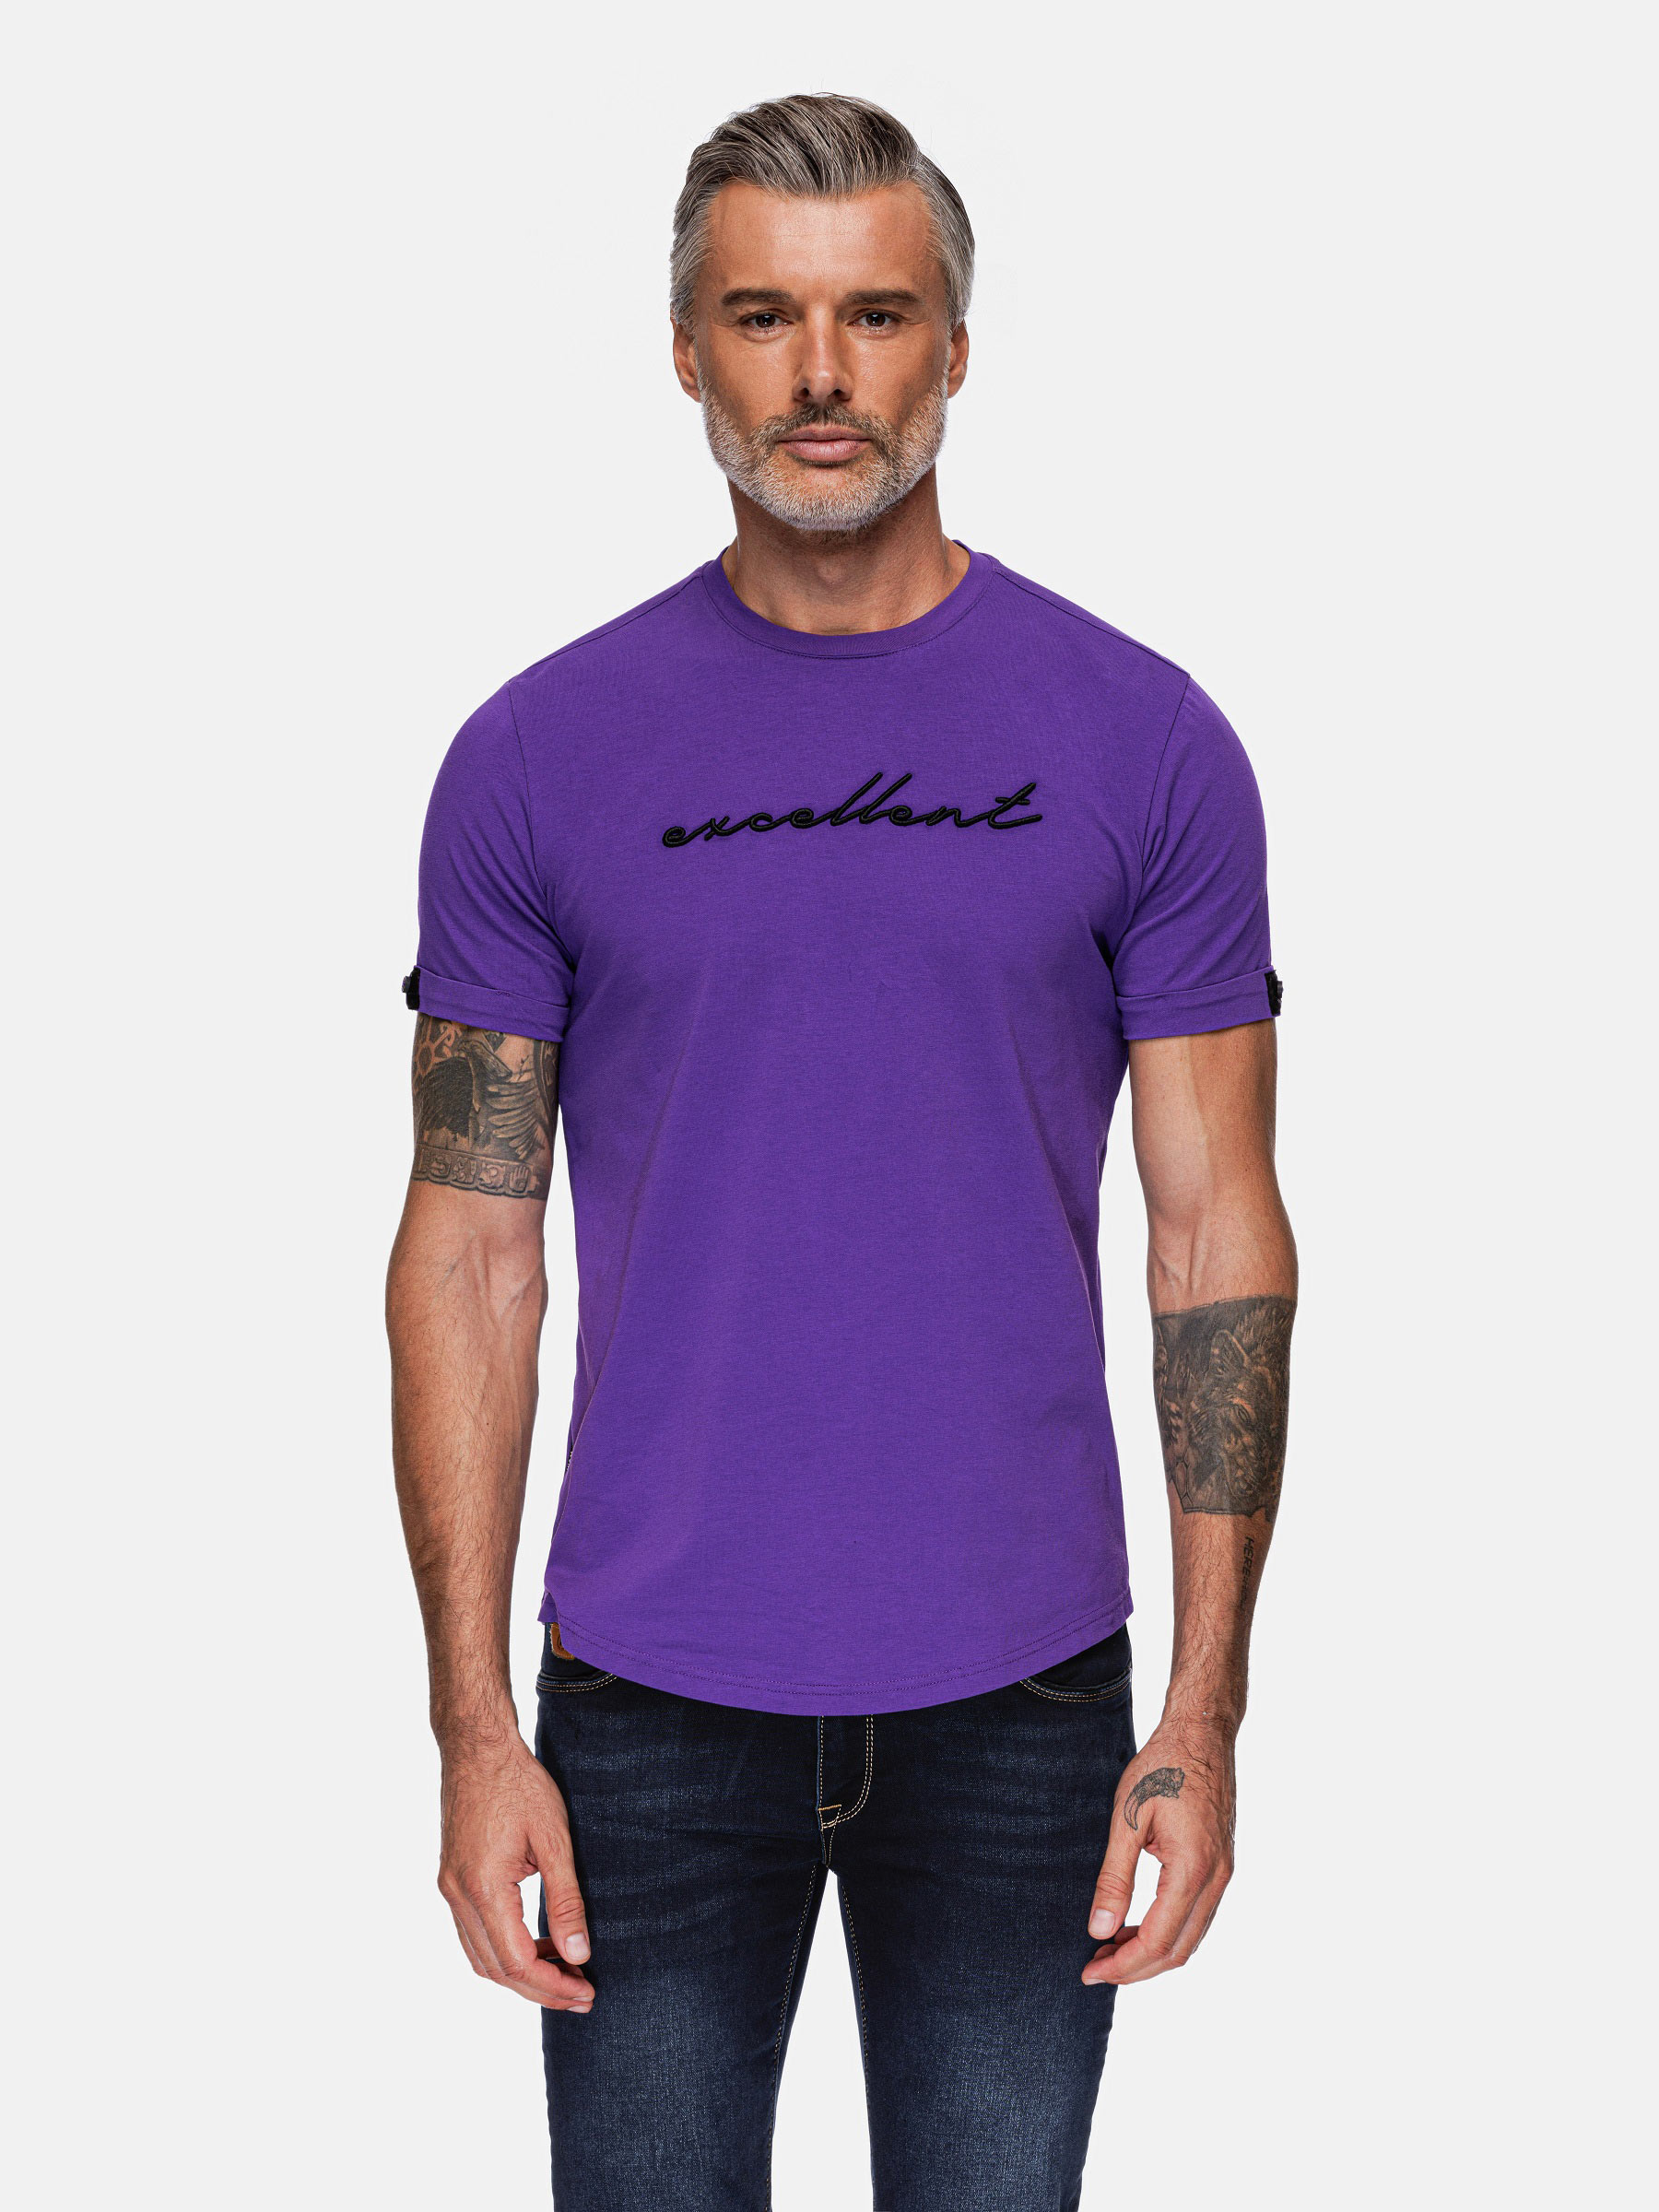 WAM Denim Carlson Crew Neck Slogan Purple T-Shirt -